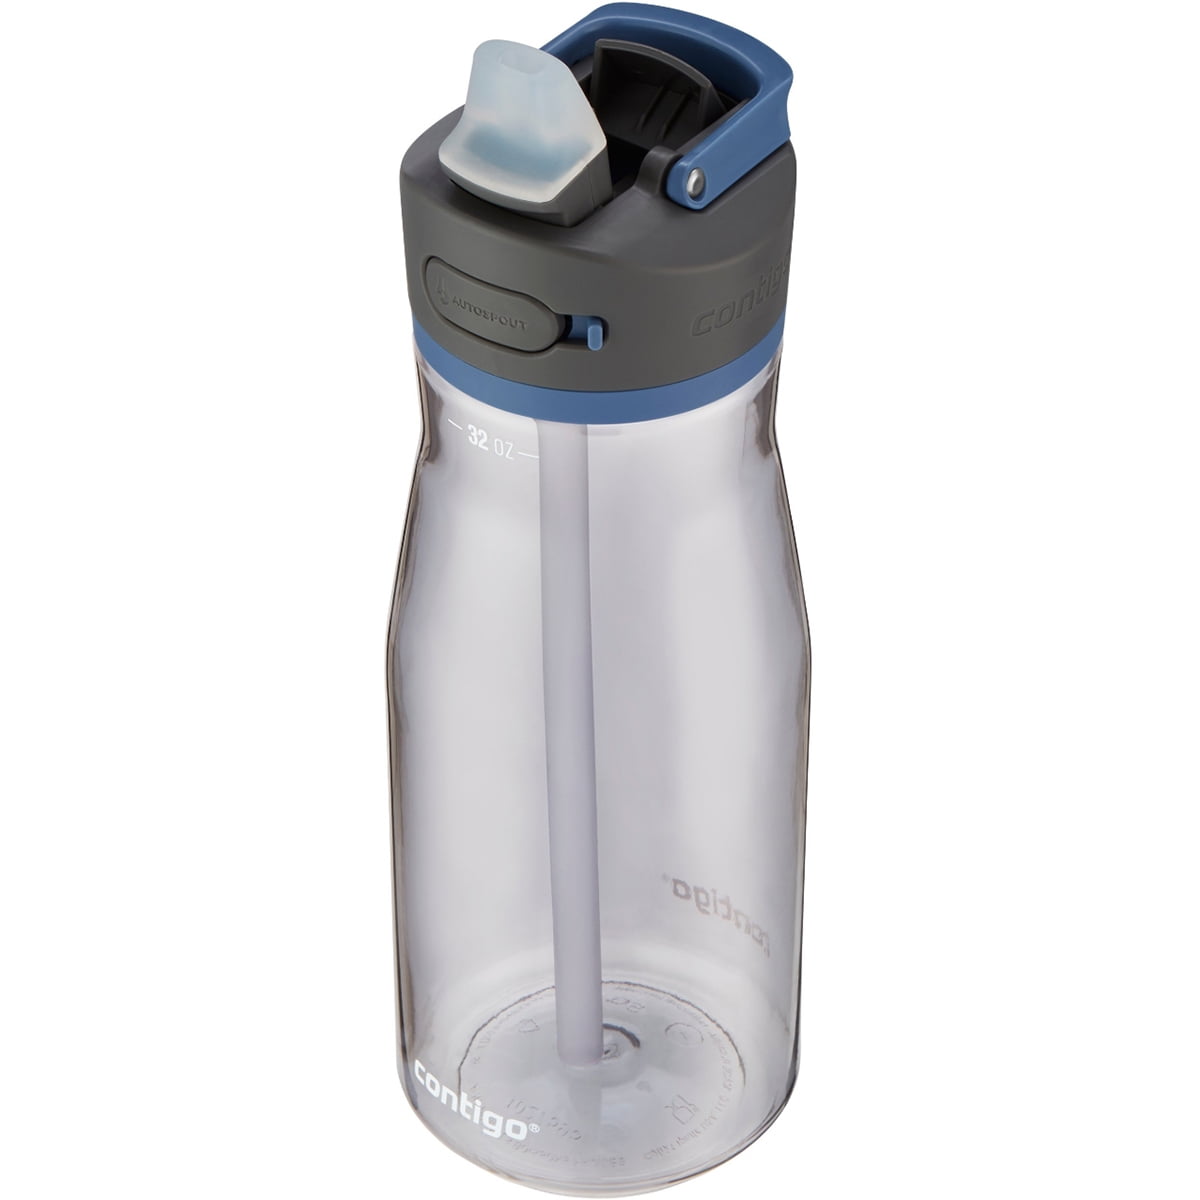 Contigo Nautical Blue Plastic Chug Water Bottle BPA Free 32 oz